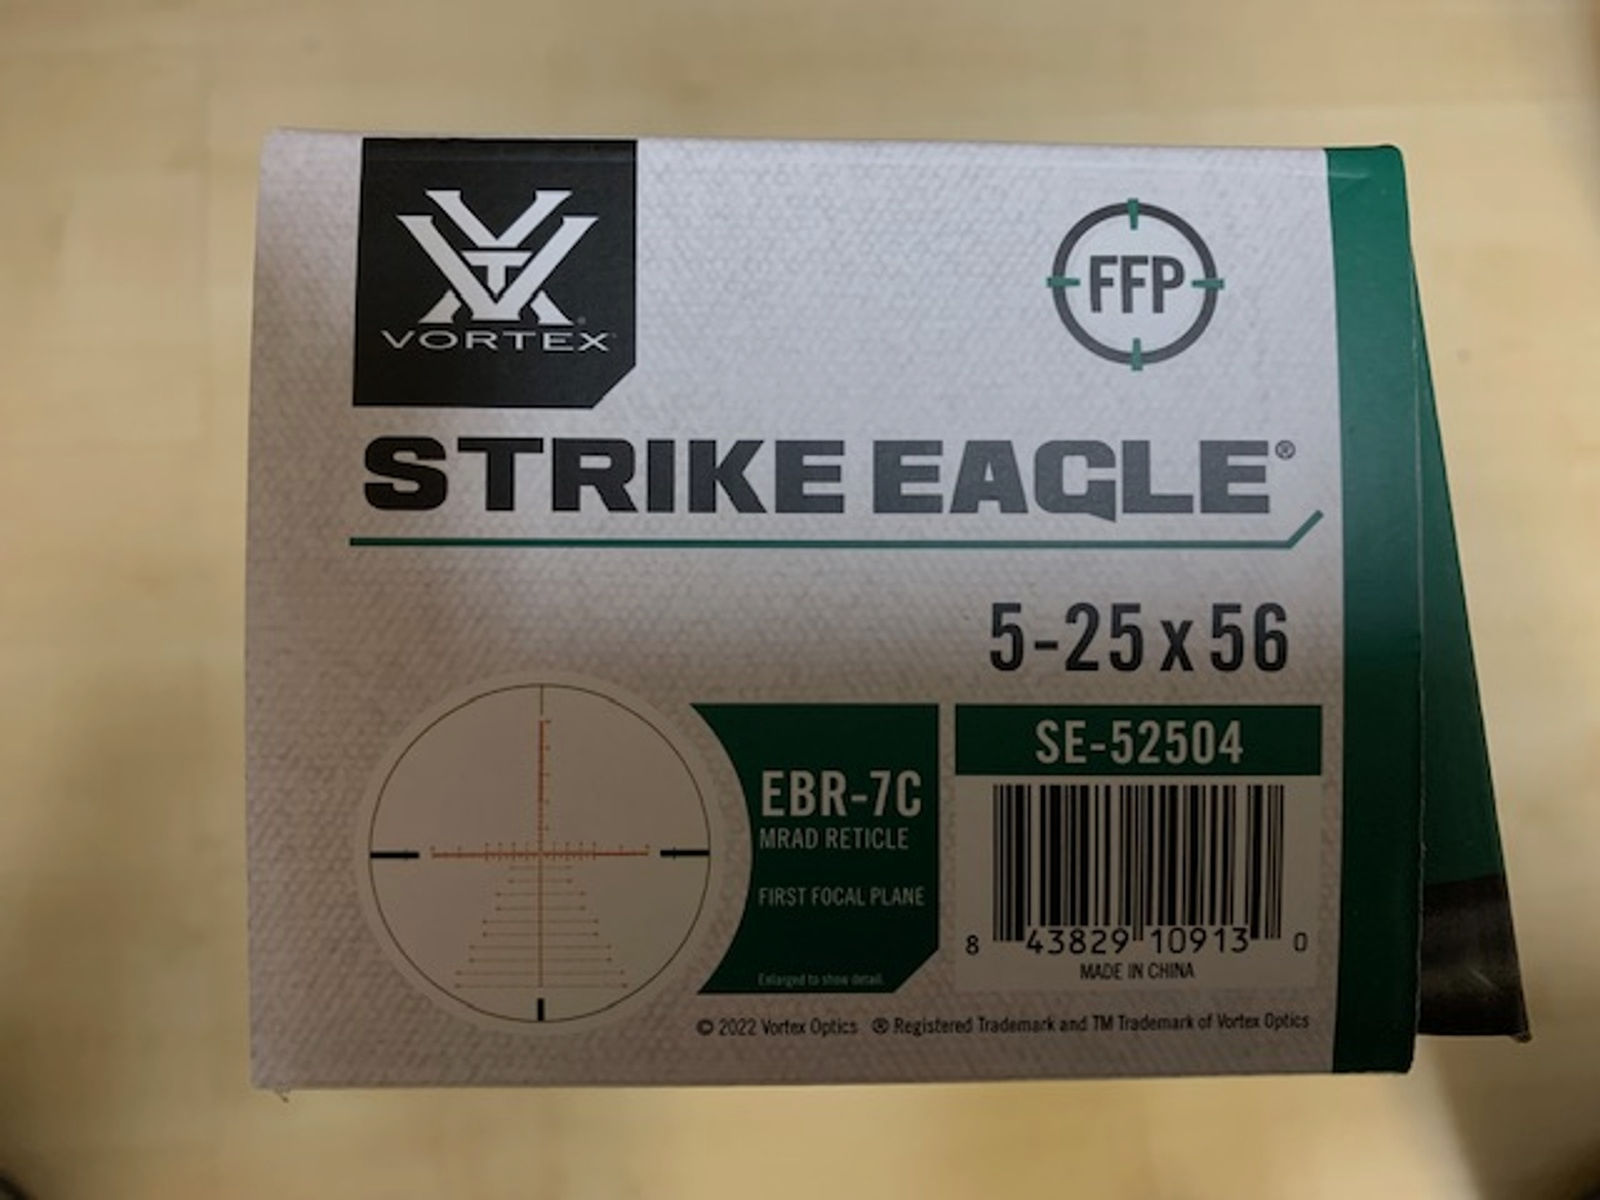 ZF VORTEX STRIKE EAGLE 5-25x56 EBR-7C MRAD